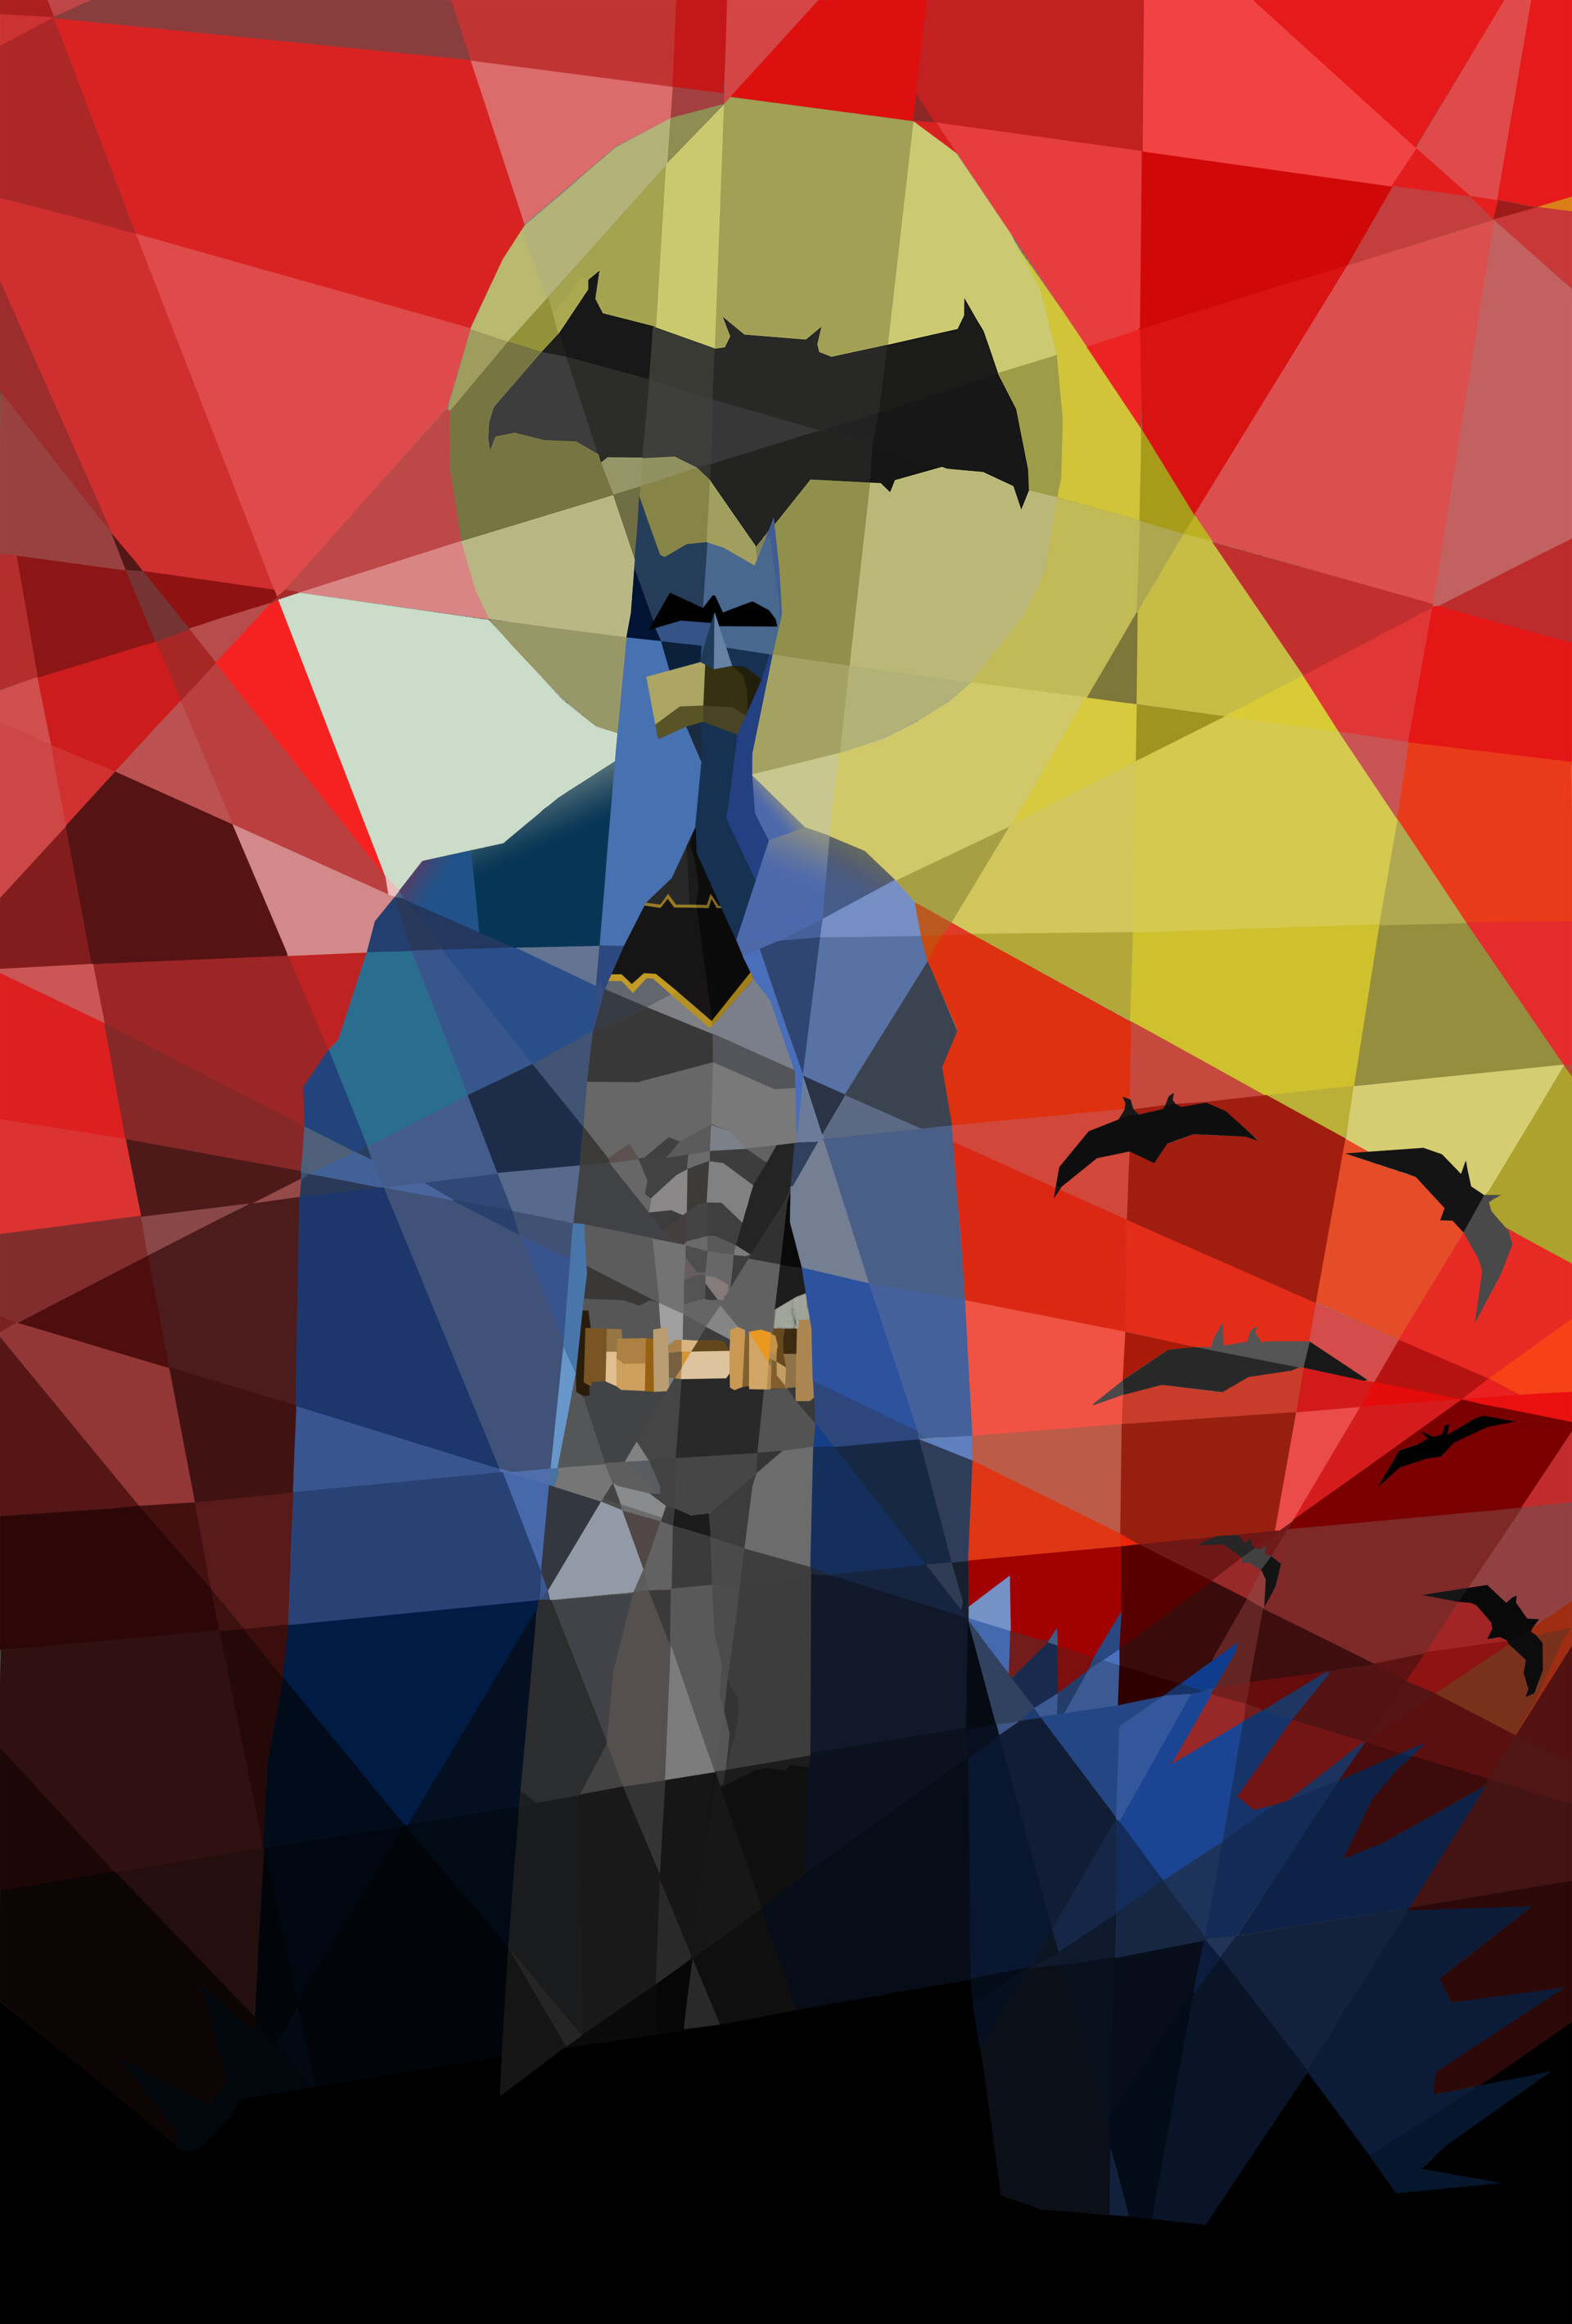 ArtStation - Abstract Batman